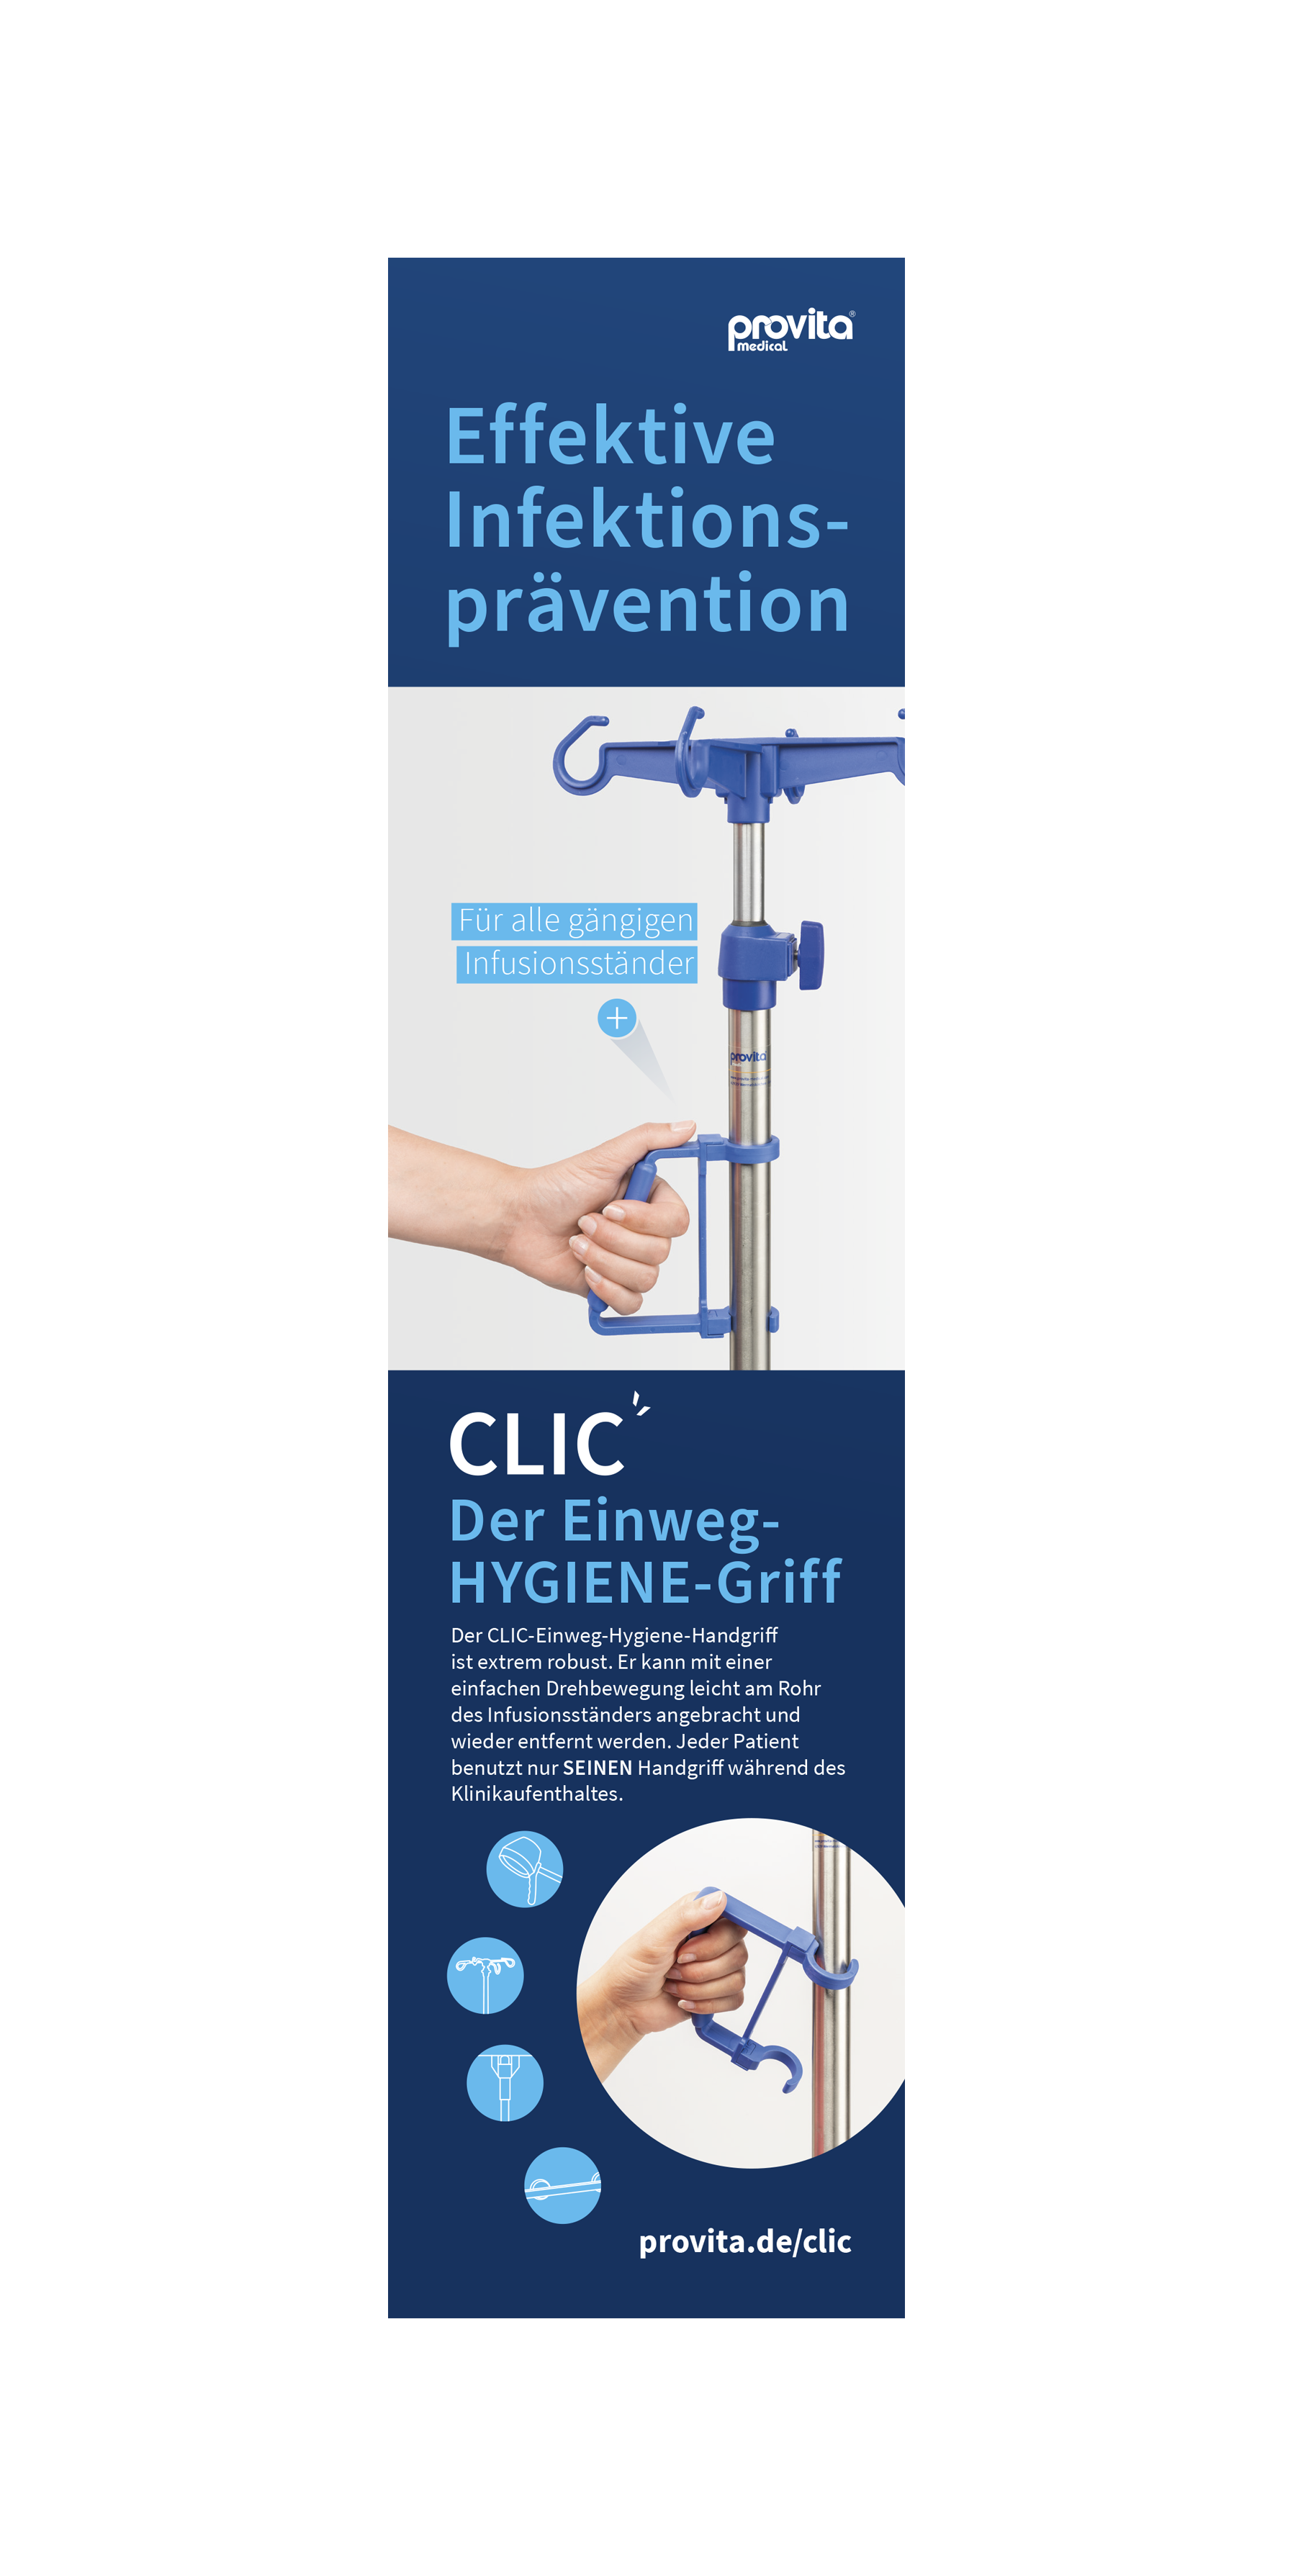 Poignée d'hygiène "CLIC"